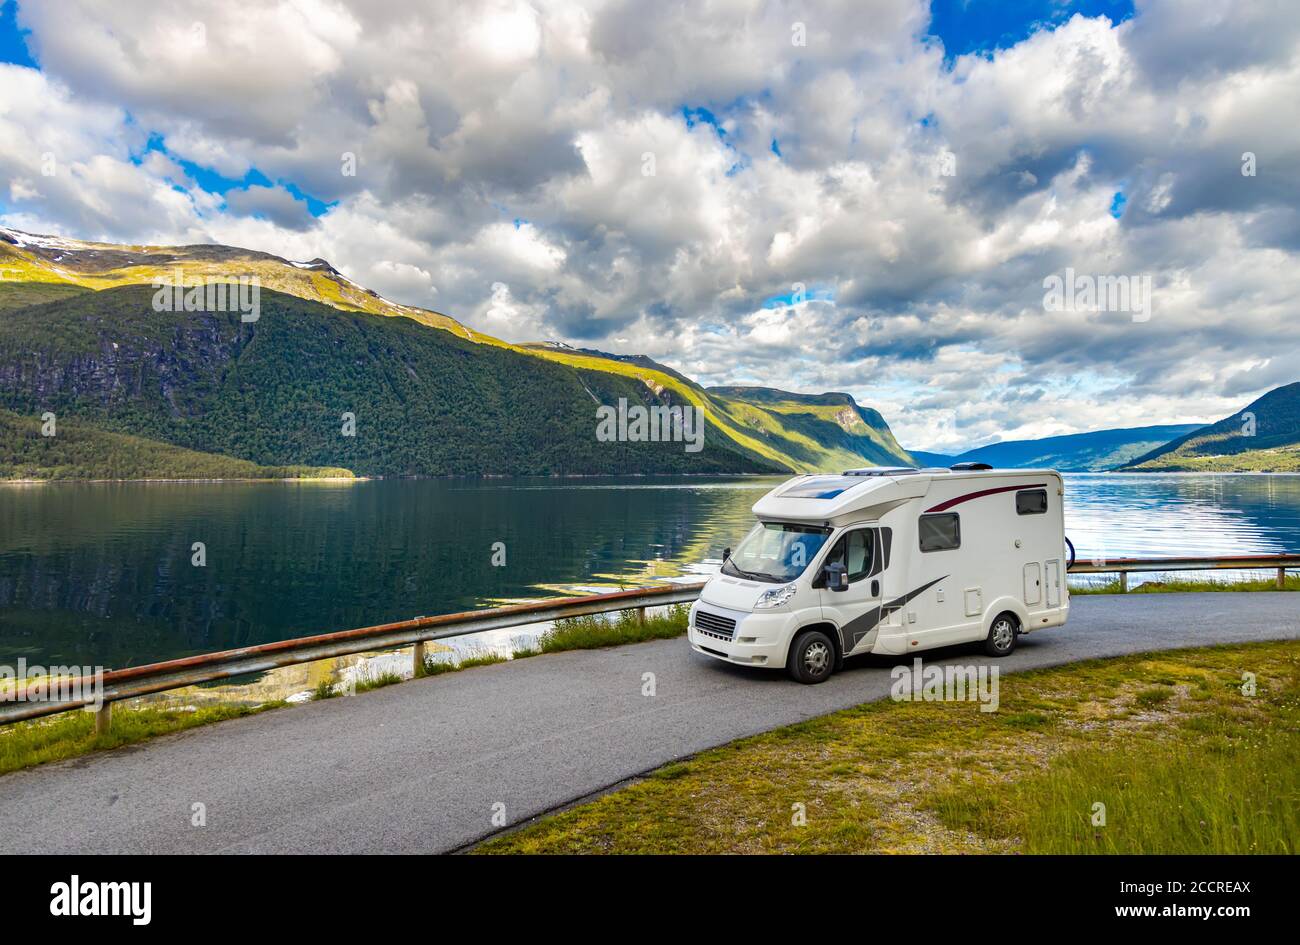 Vacances famille billet RV, vacances voyage en camping-car, caravane location de vacances. Banque D'Images